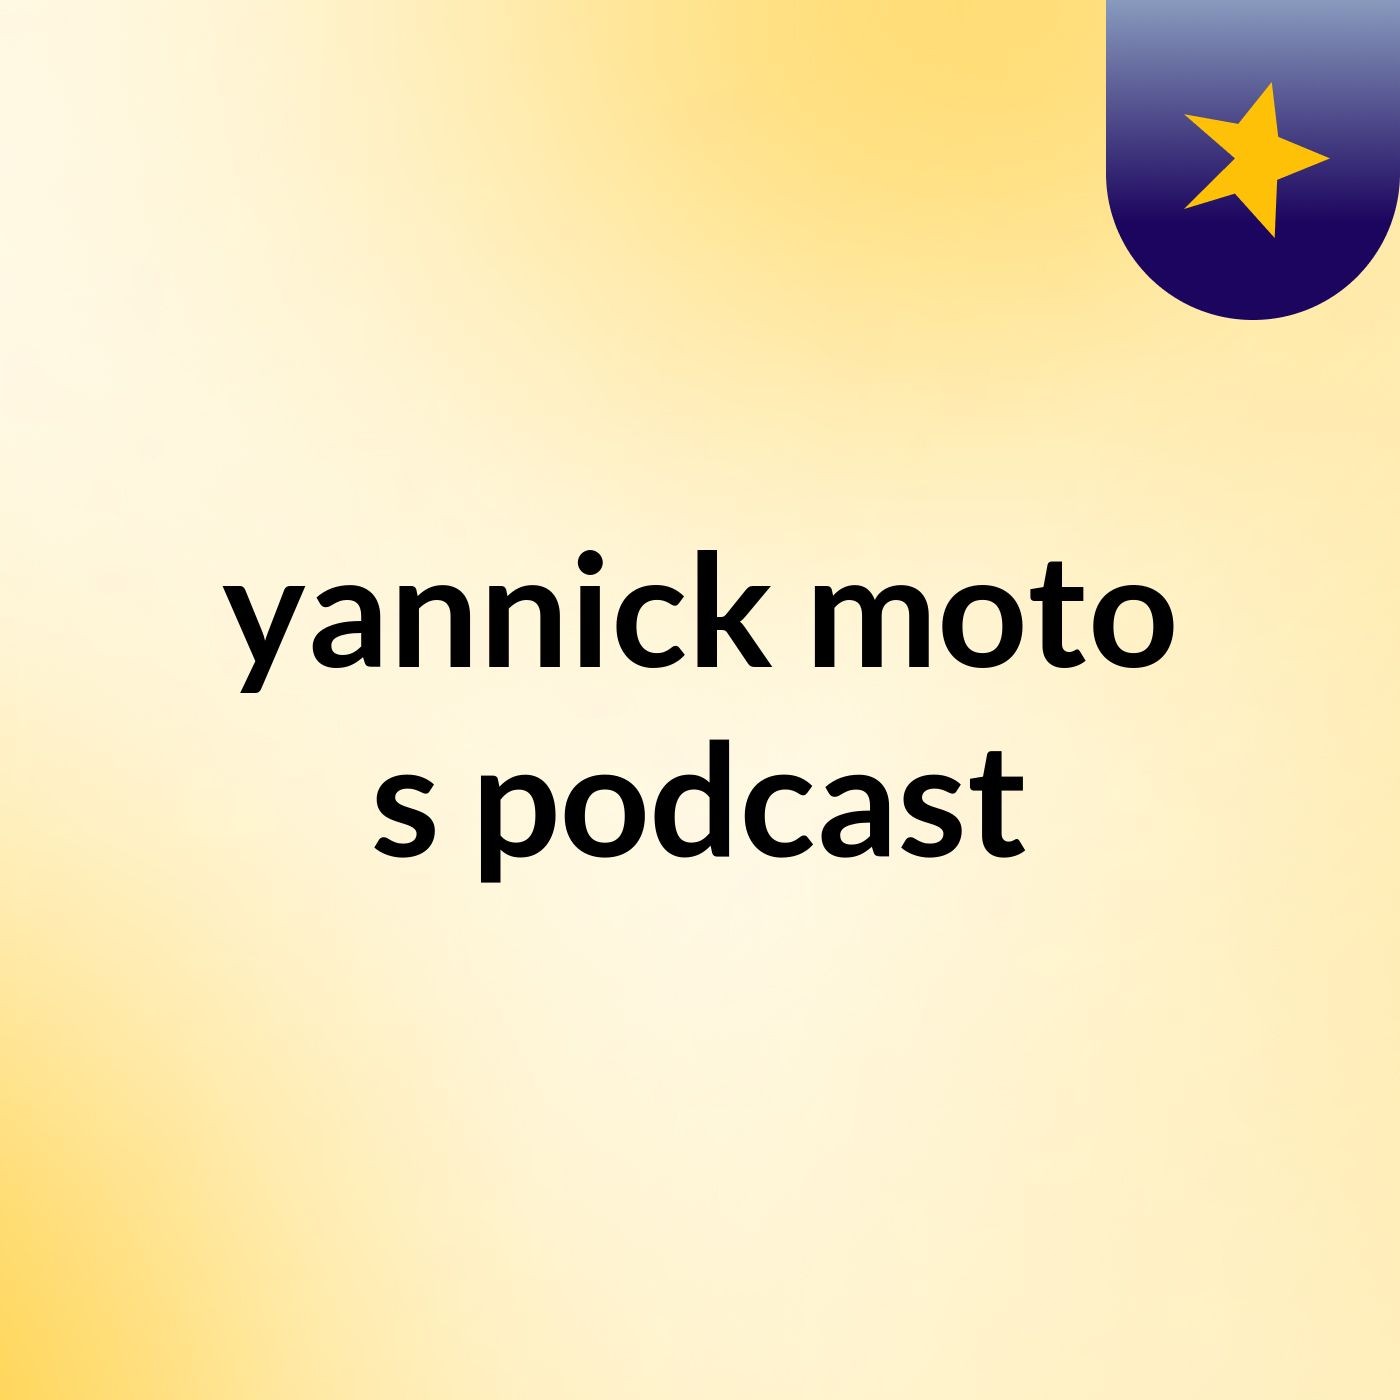 yannick moto's podcast